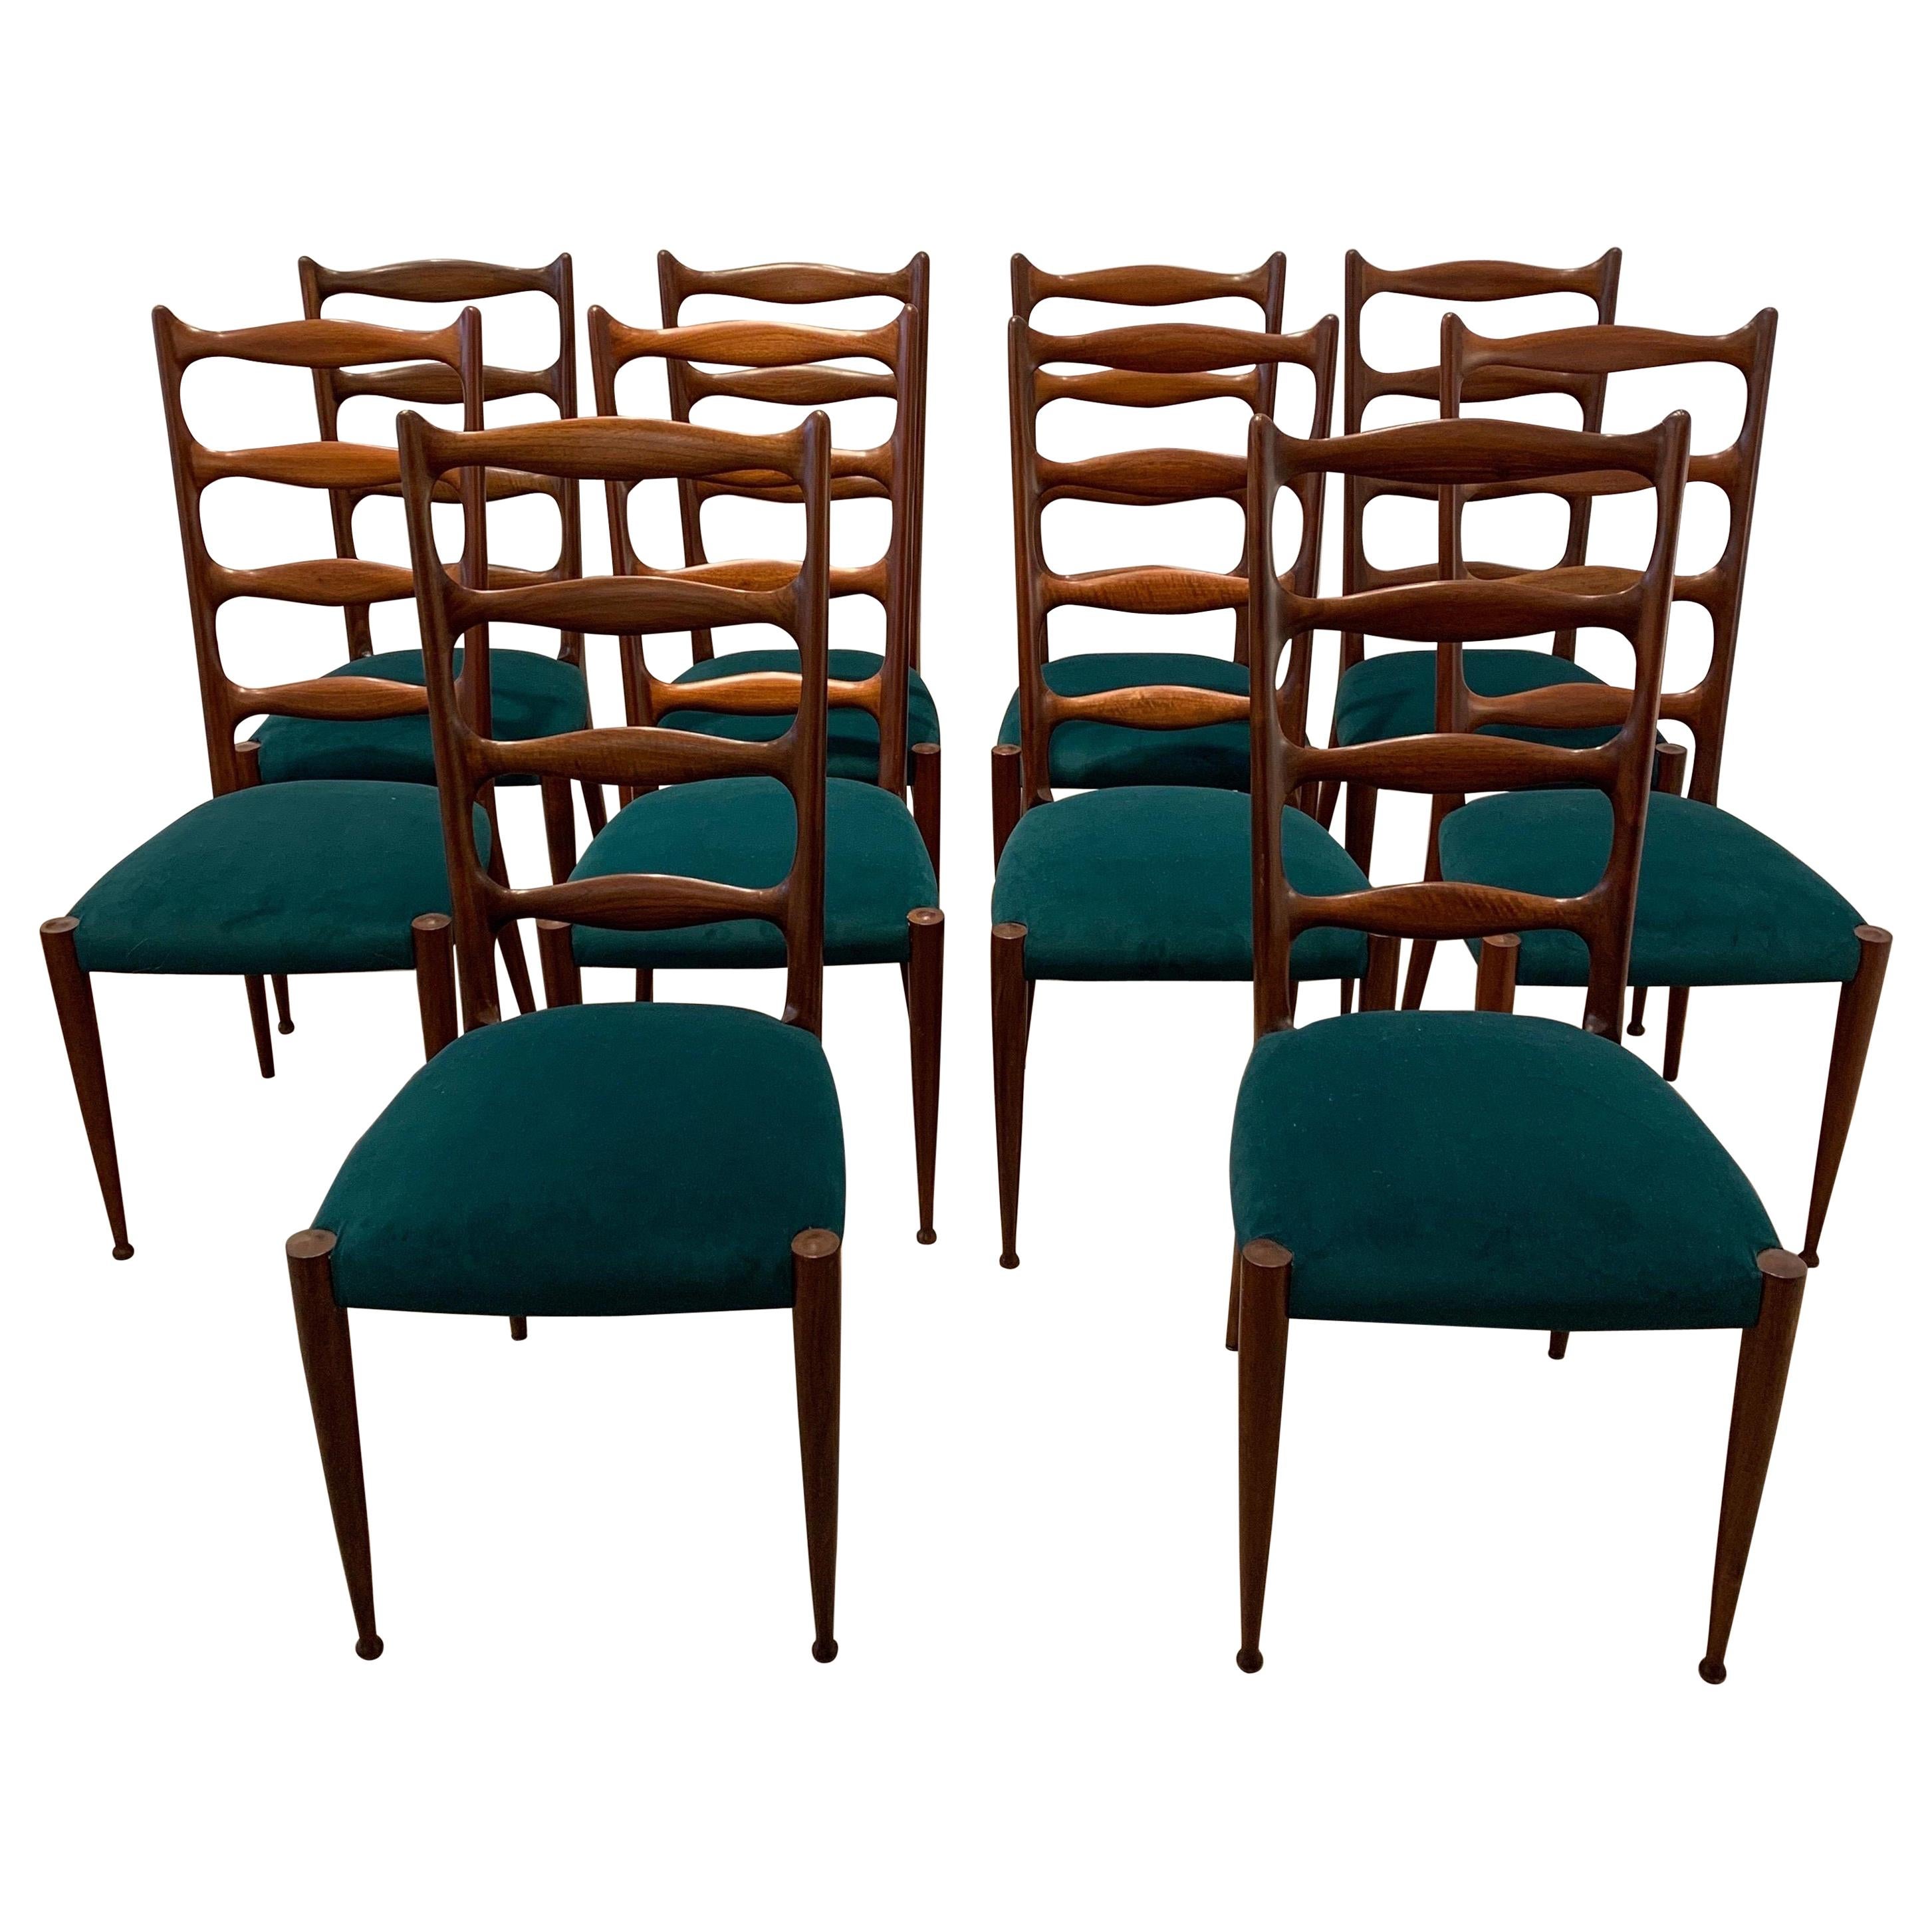 Set of 10 Italian Chairs, 1940s